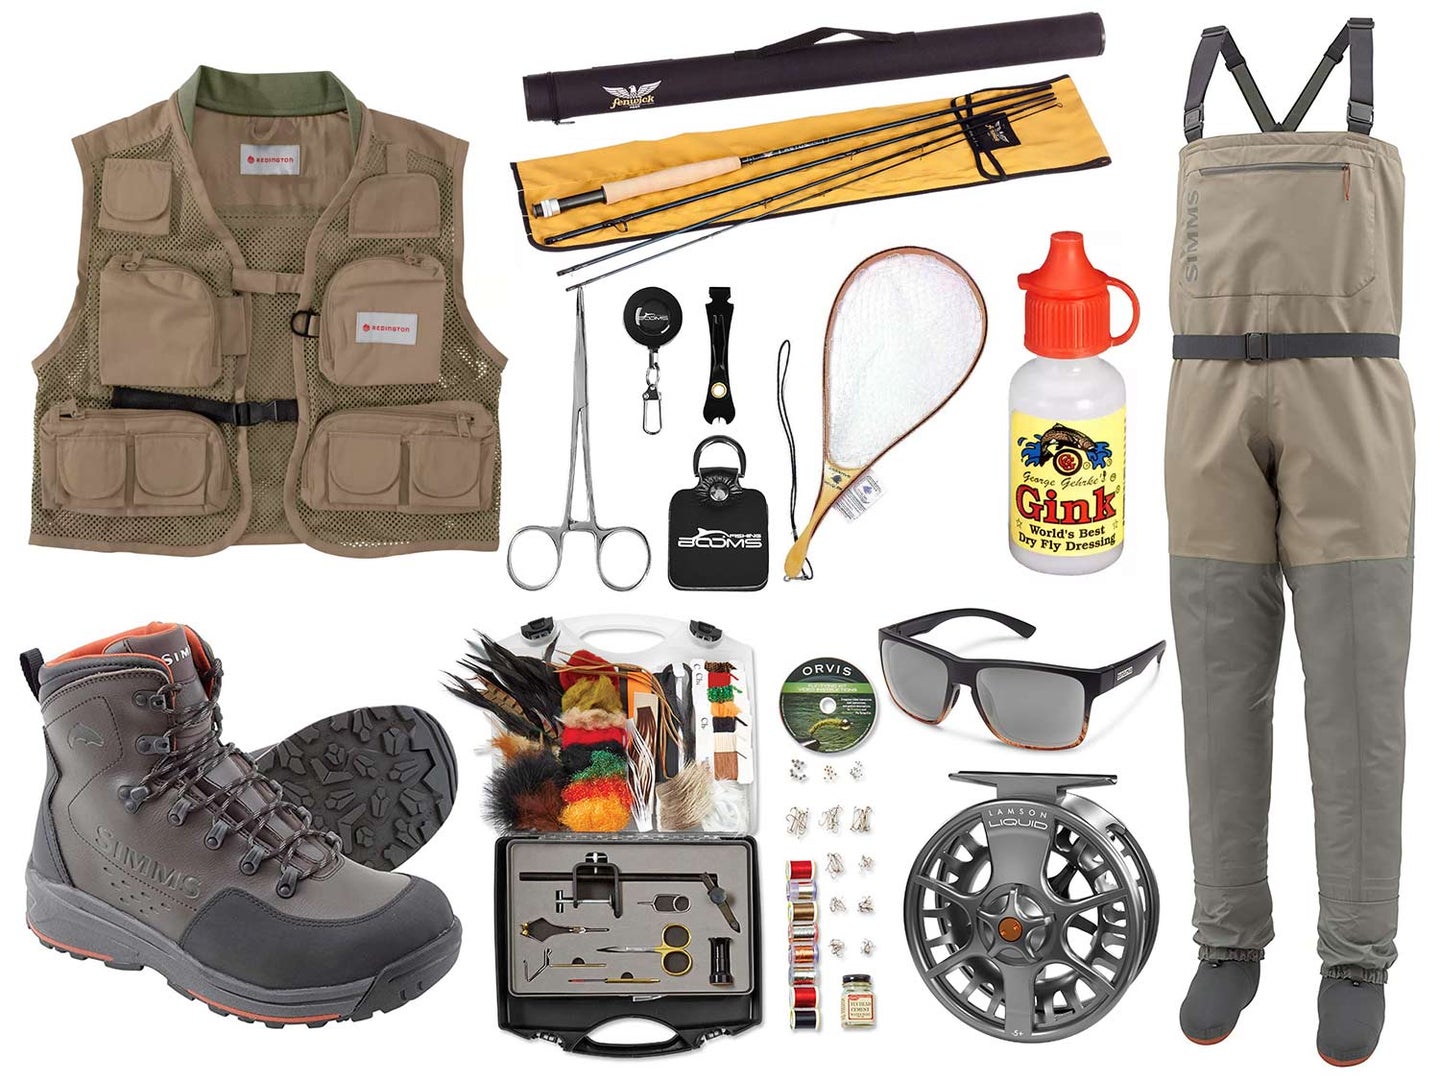 Fishing Equipment for Beginners: Best Gear, Kits for Kids